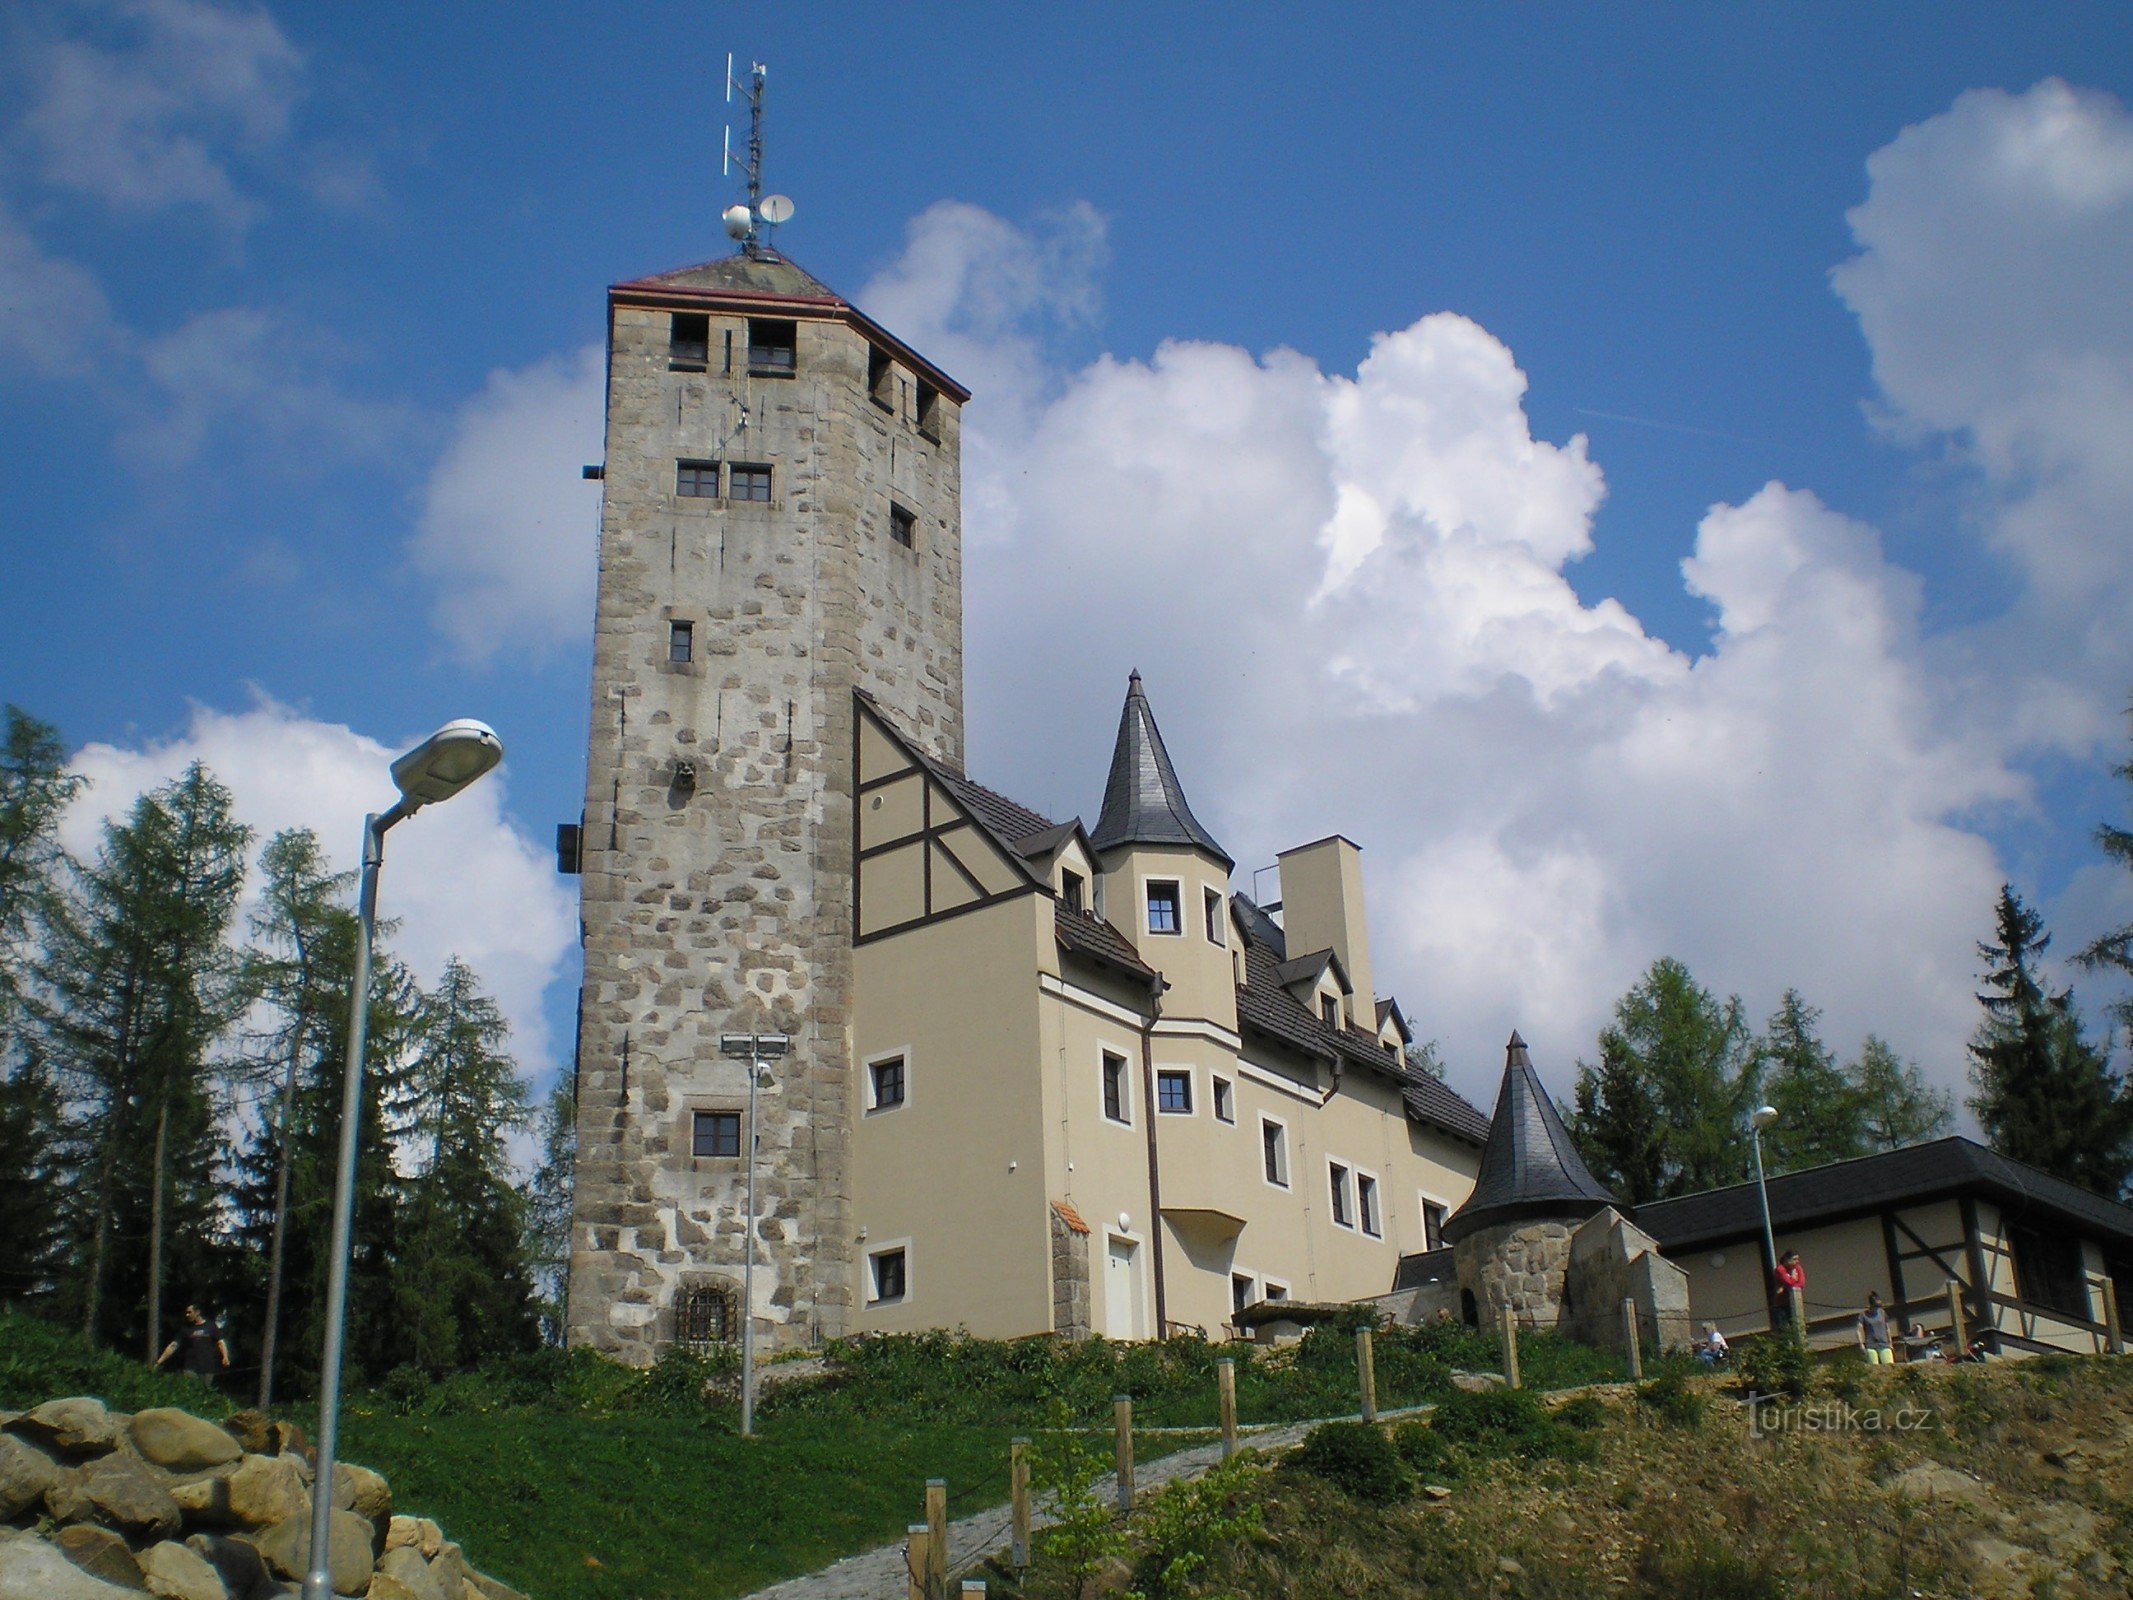 Torre di avvistamento Liberecká víšina